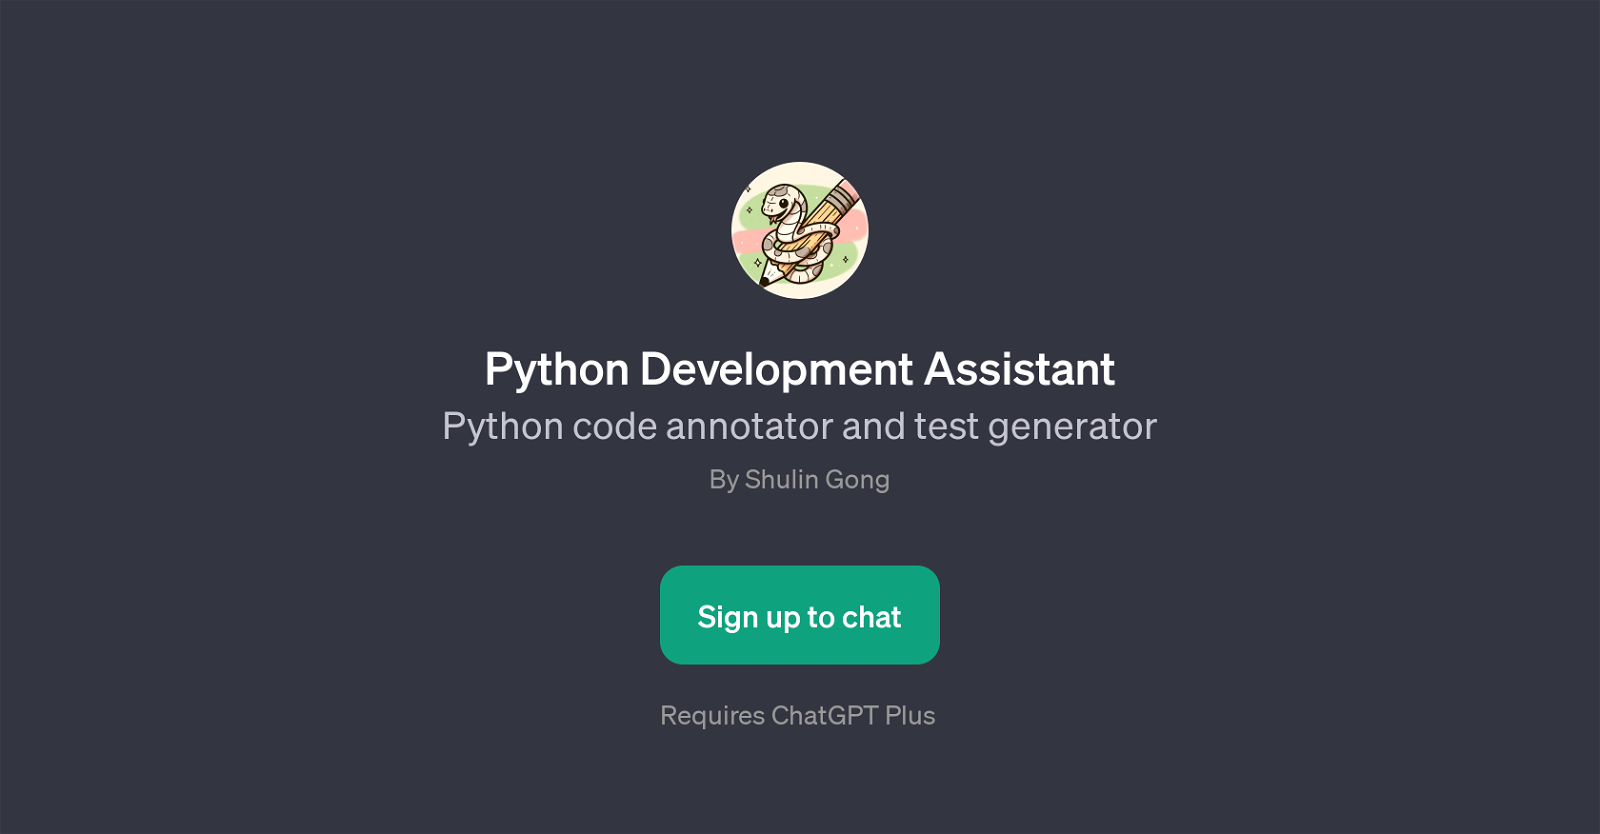 Python Development Assistant website